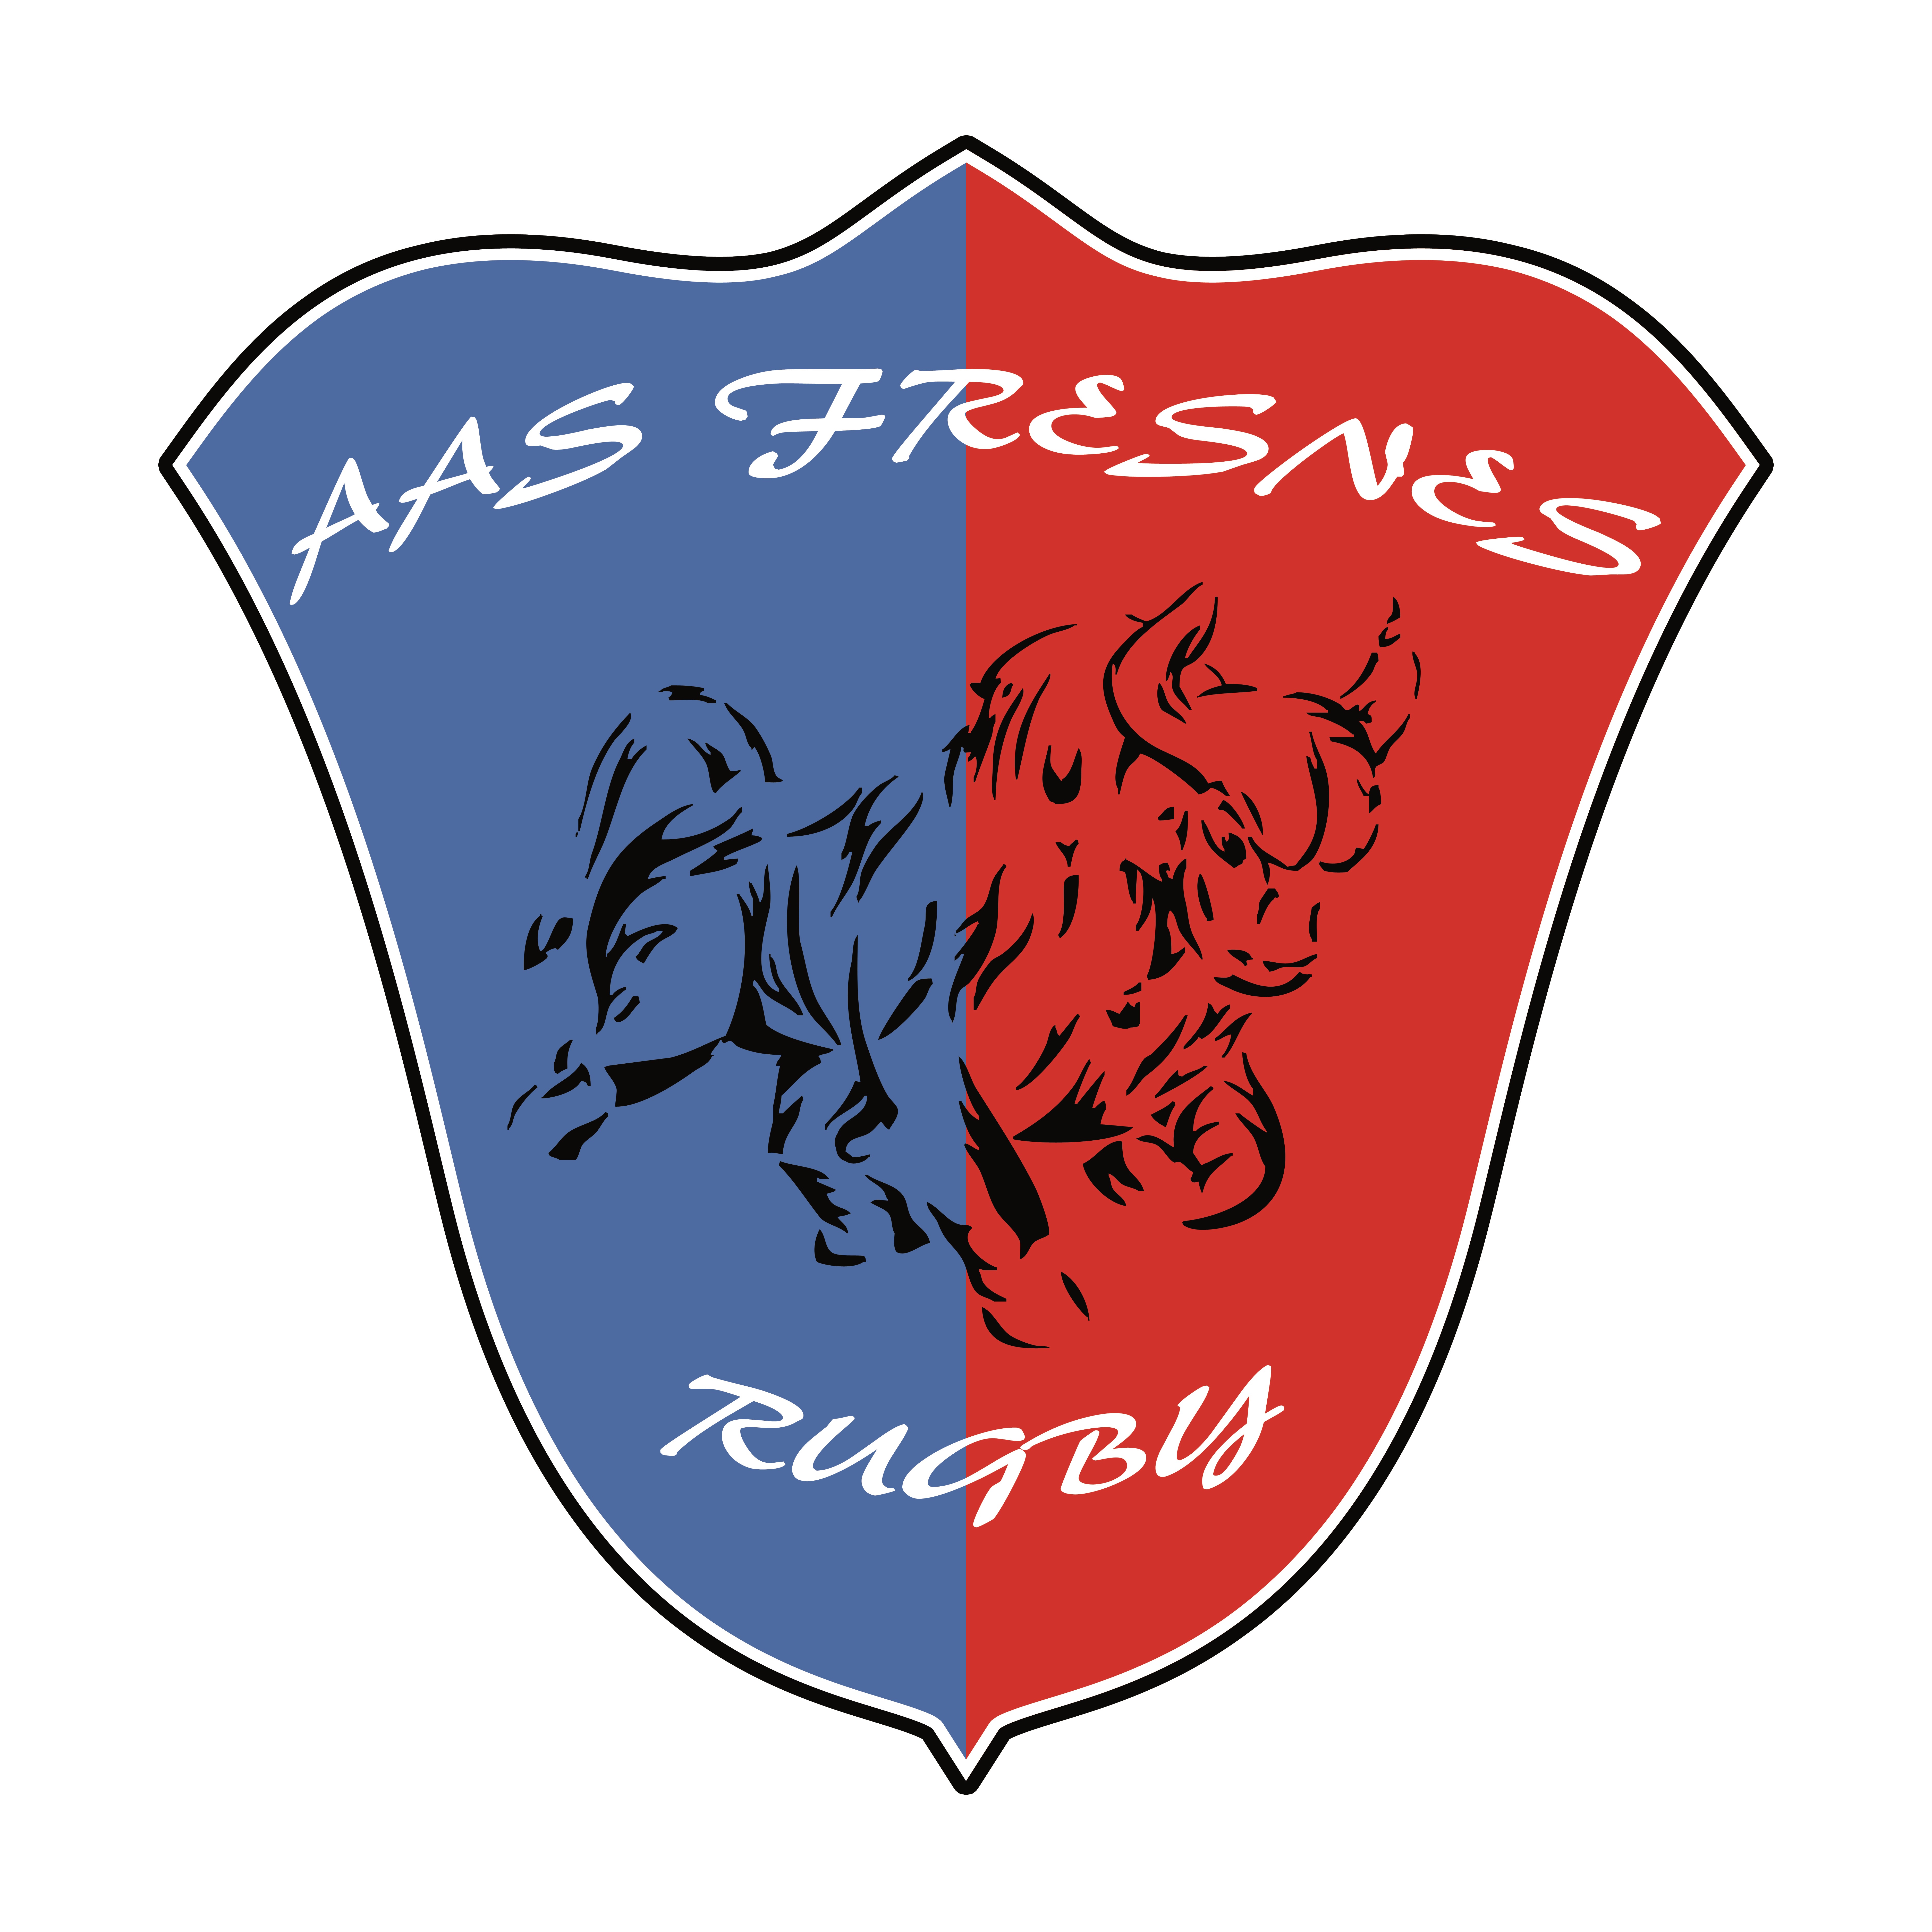 aas-fresnes-rugby-logo-620a88e450966065750605.jpg